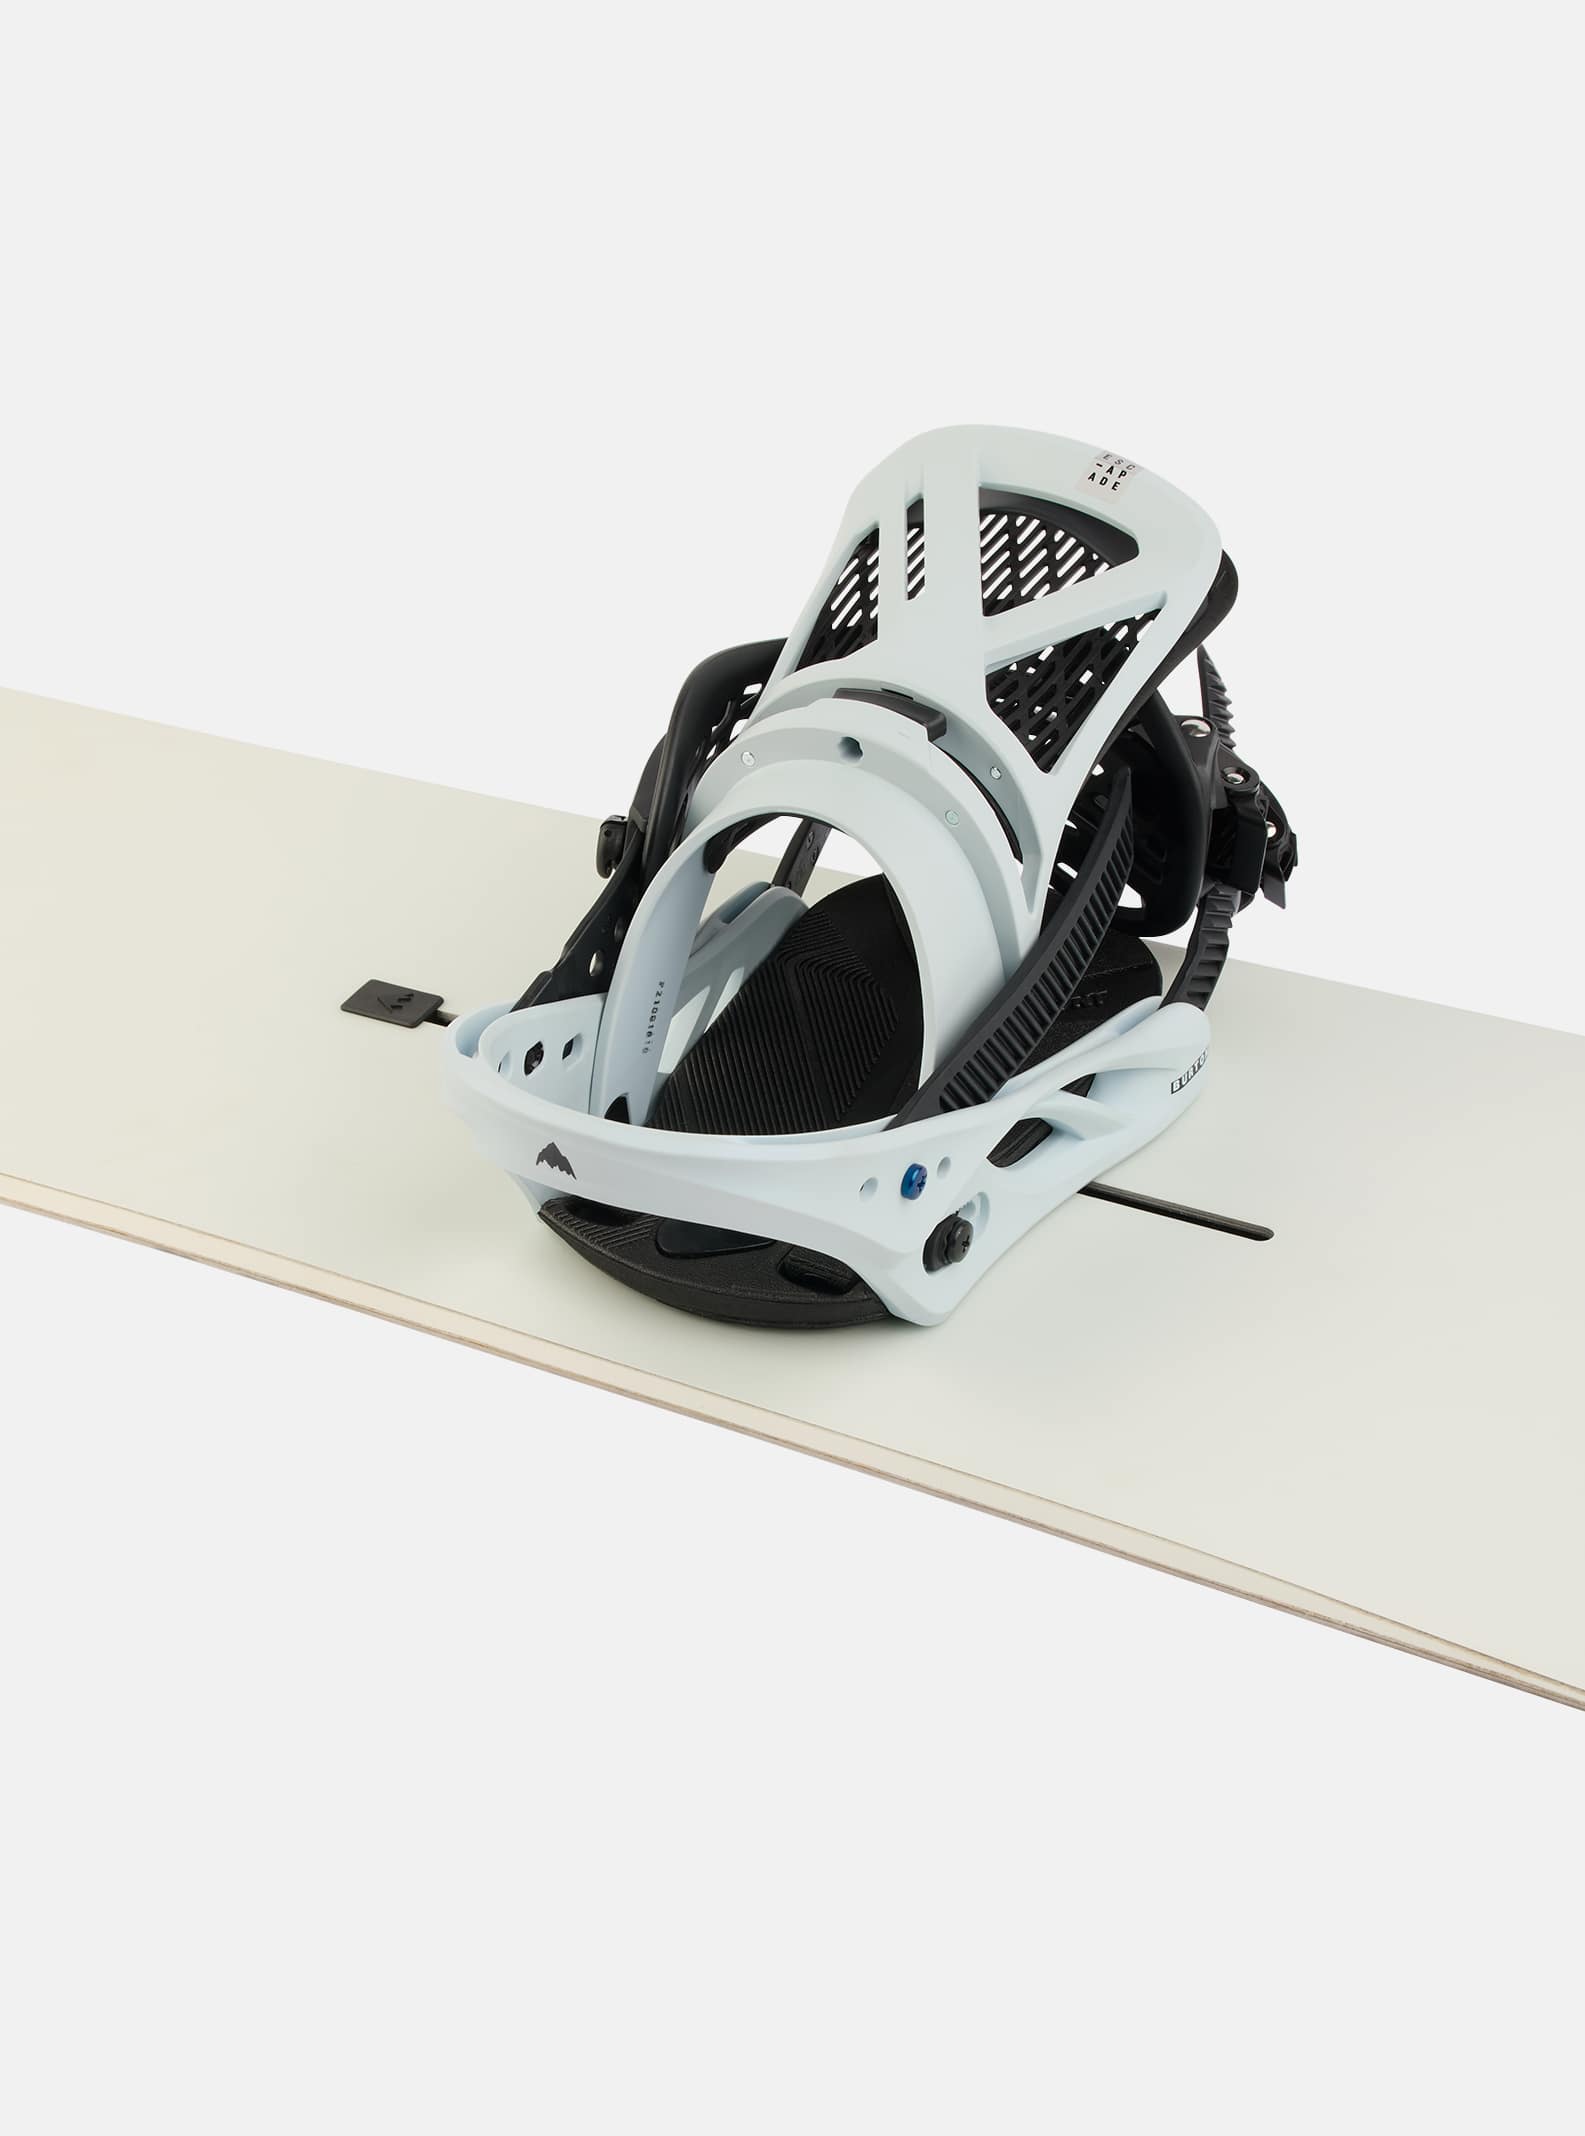 Women's Escapade Re:Flex Snowboard Bindings | Burton.com Winter 